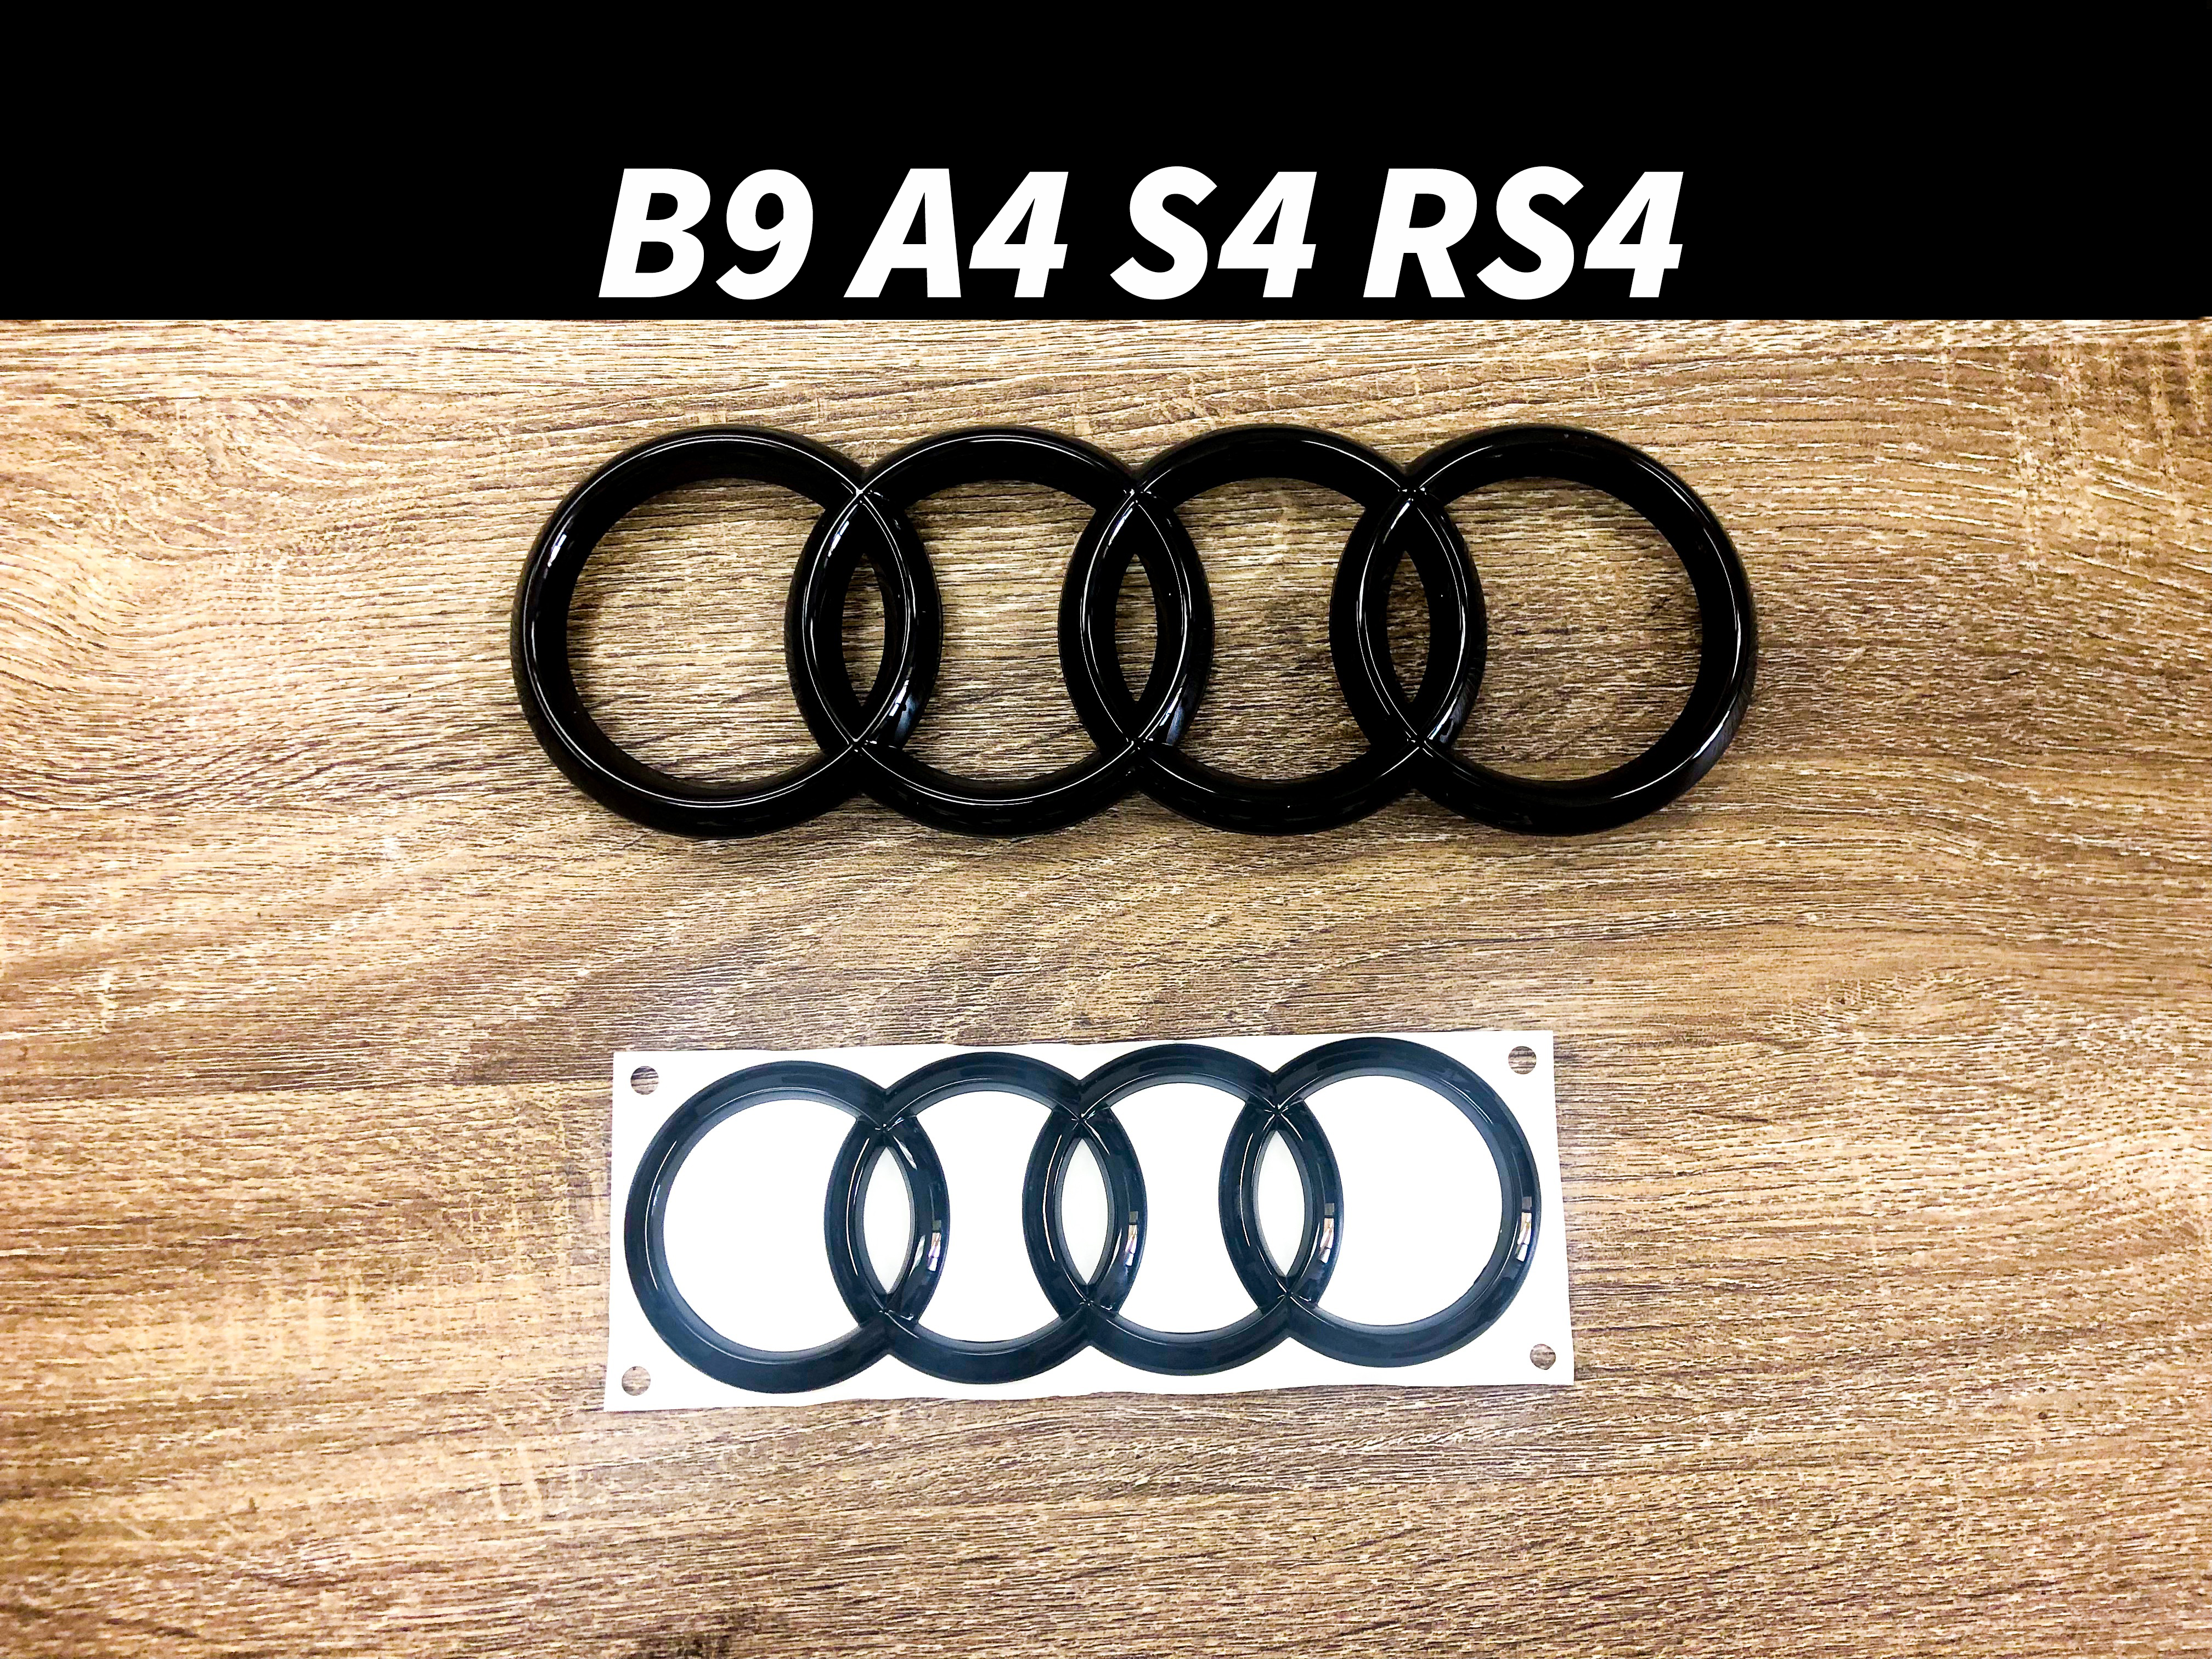 Audi Blackout Rings Emblem Badge B9 A4 S4 RS4 OEM size